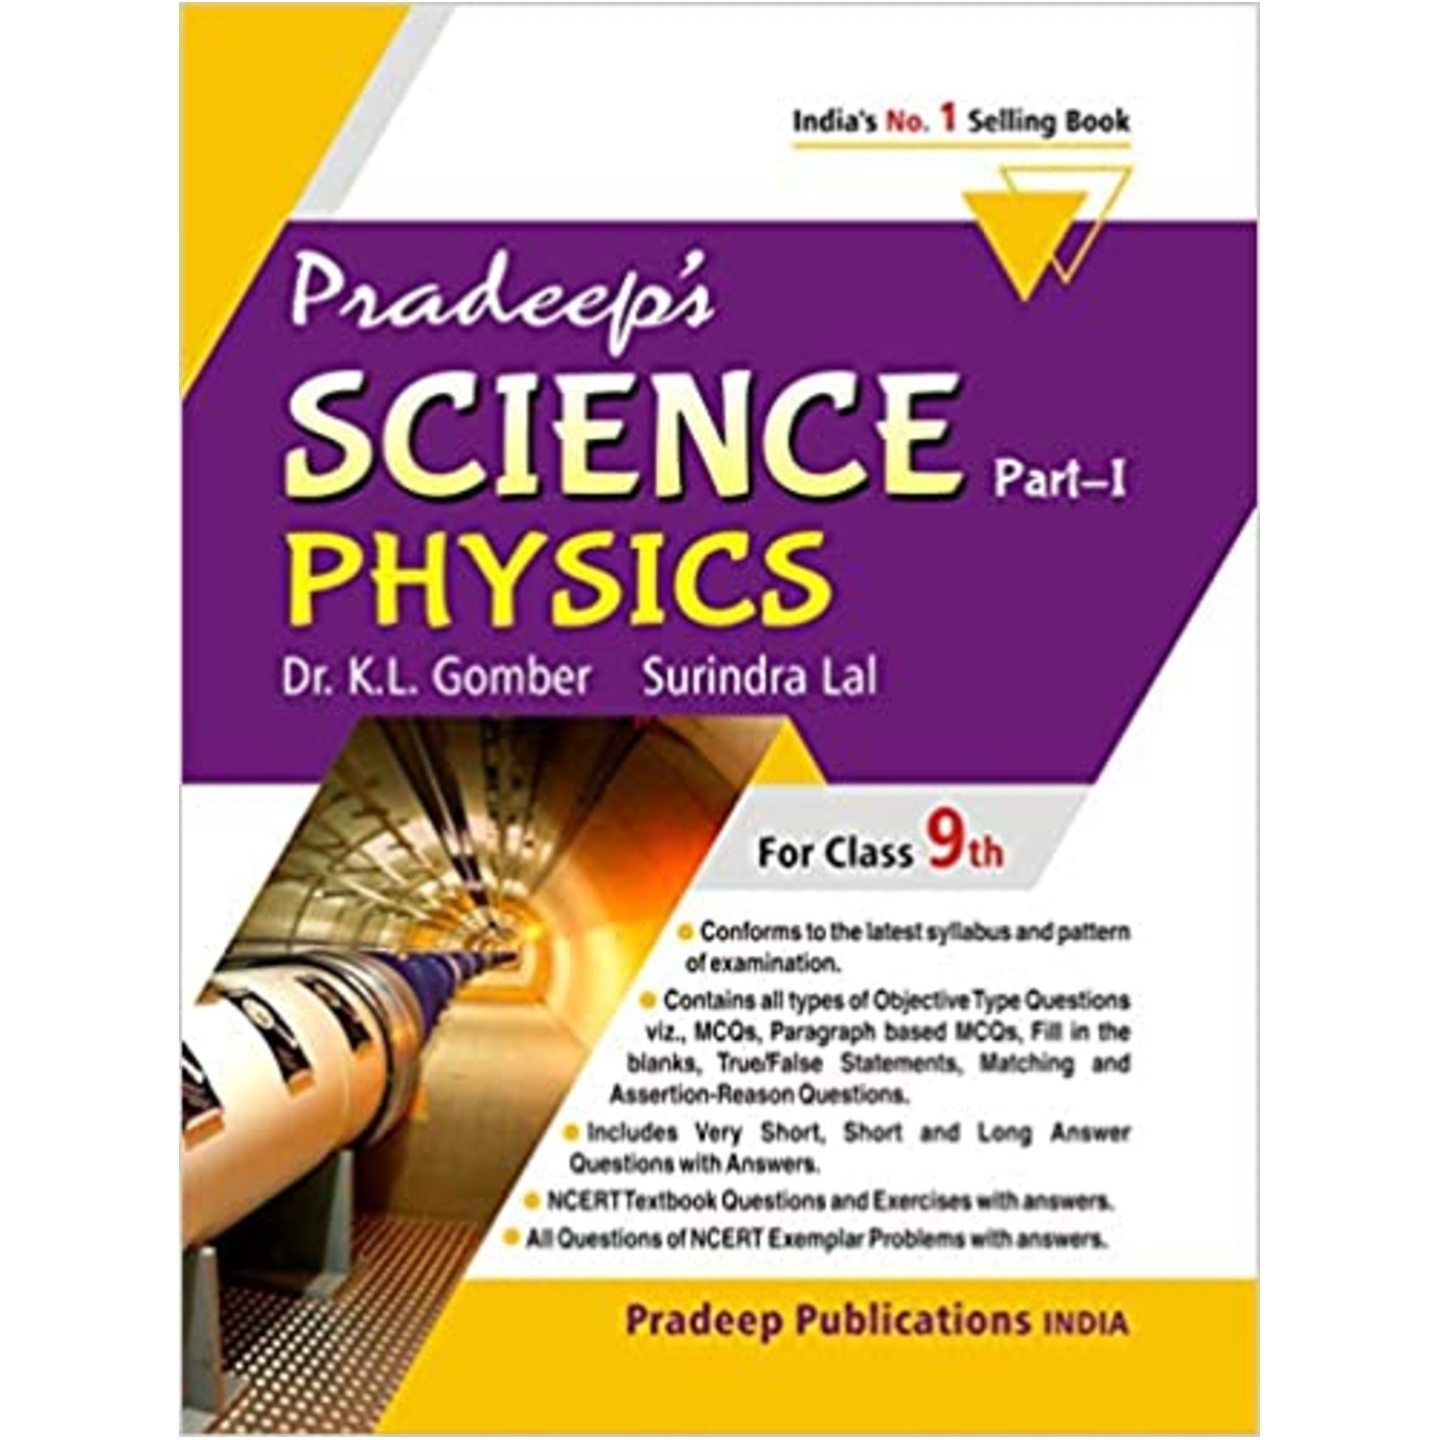 Pradeeps Science Part I Physics for Class 9